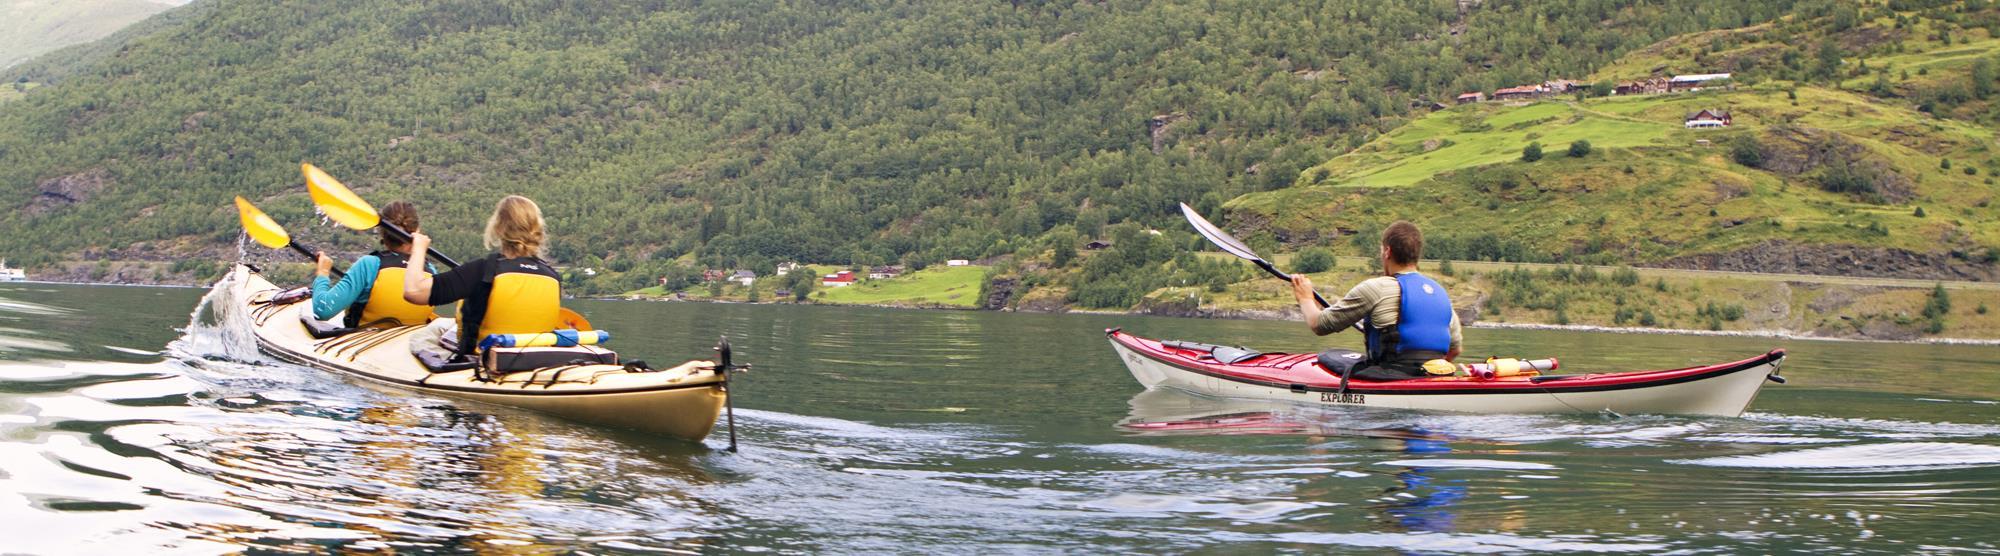 Kayaking in the Norwegian fjords